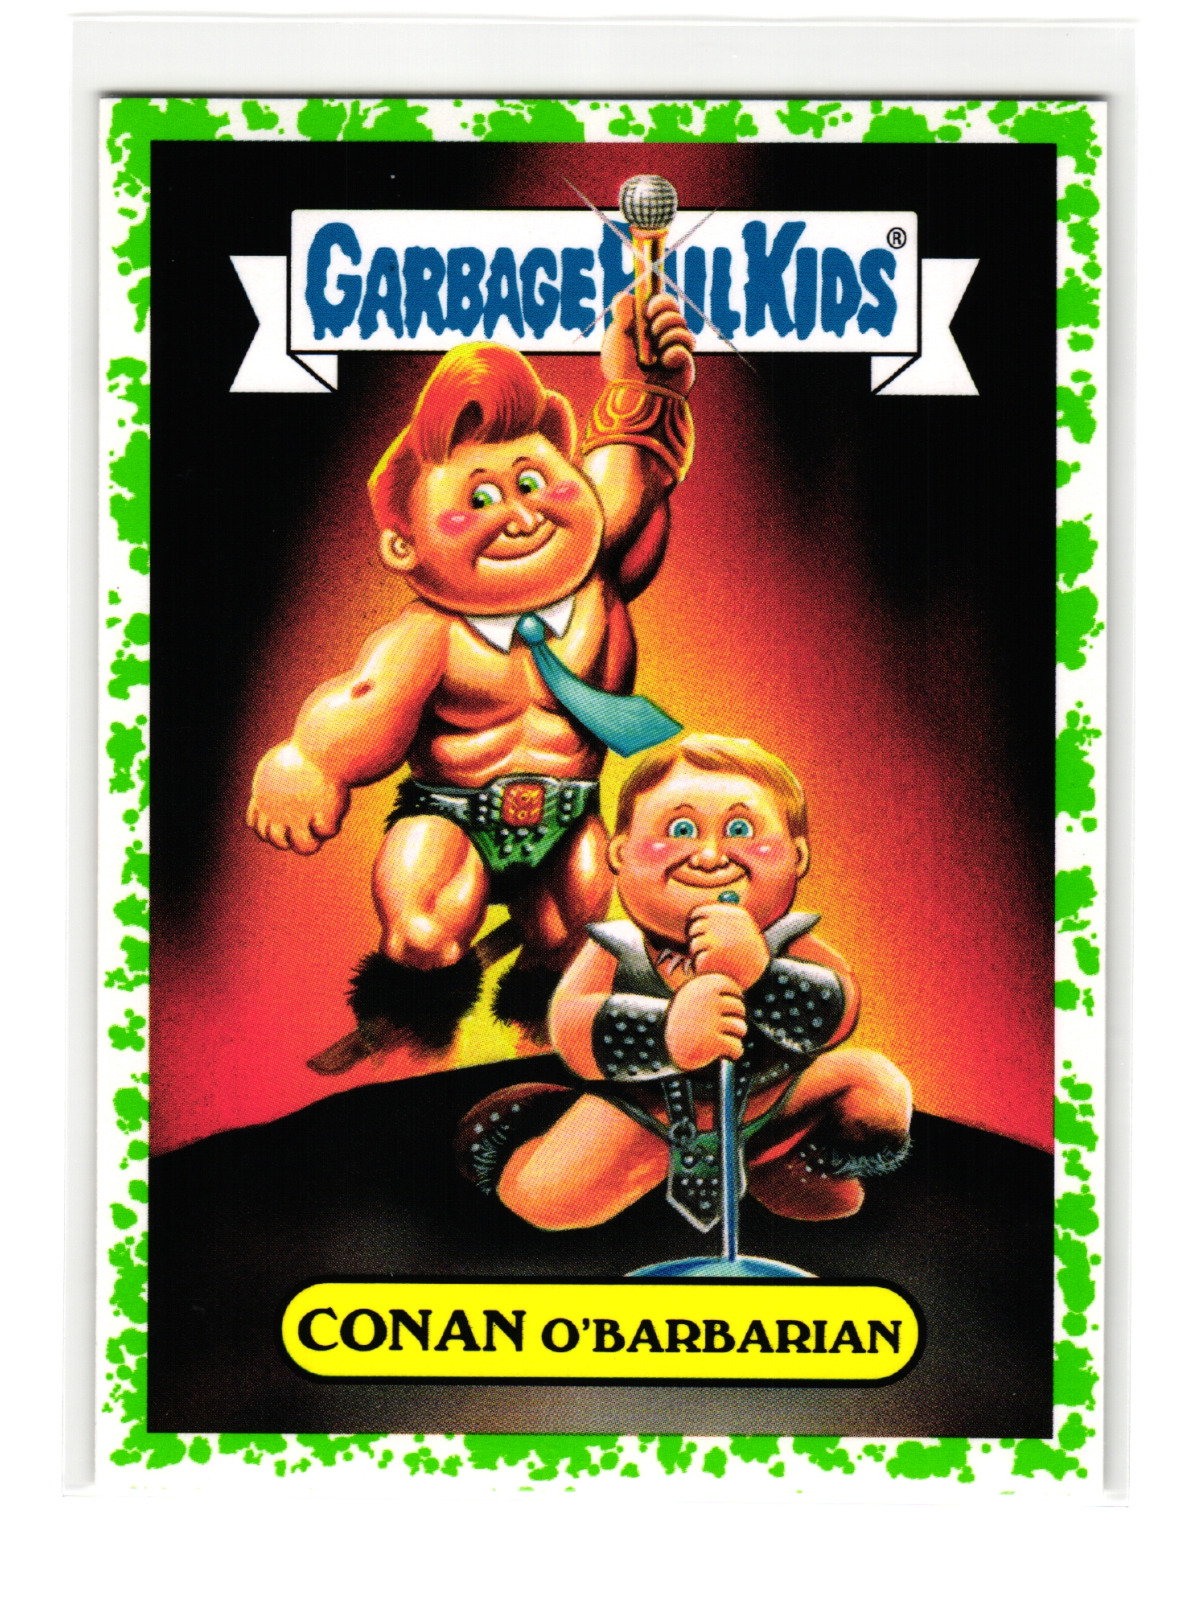 Conan O'Barbarian 2016 Topps Garbage Pail Kids Late Night Parody Sticker Card 2a